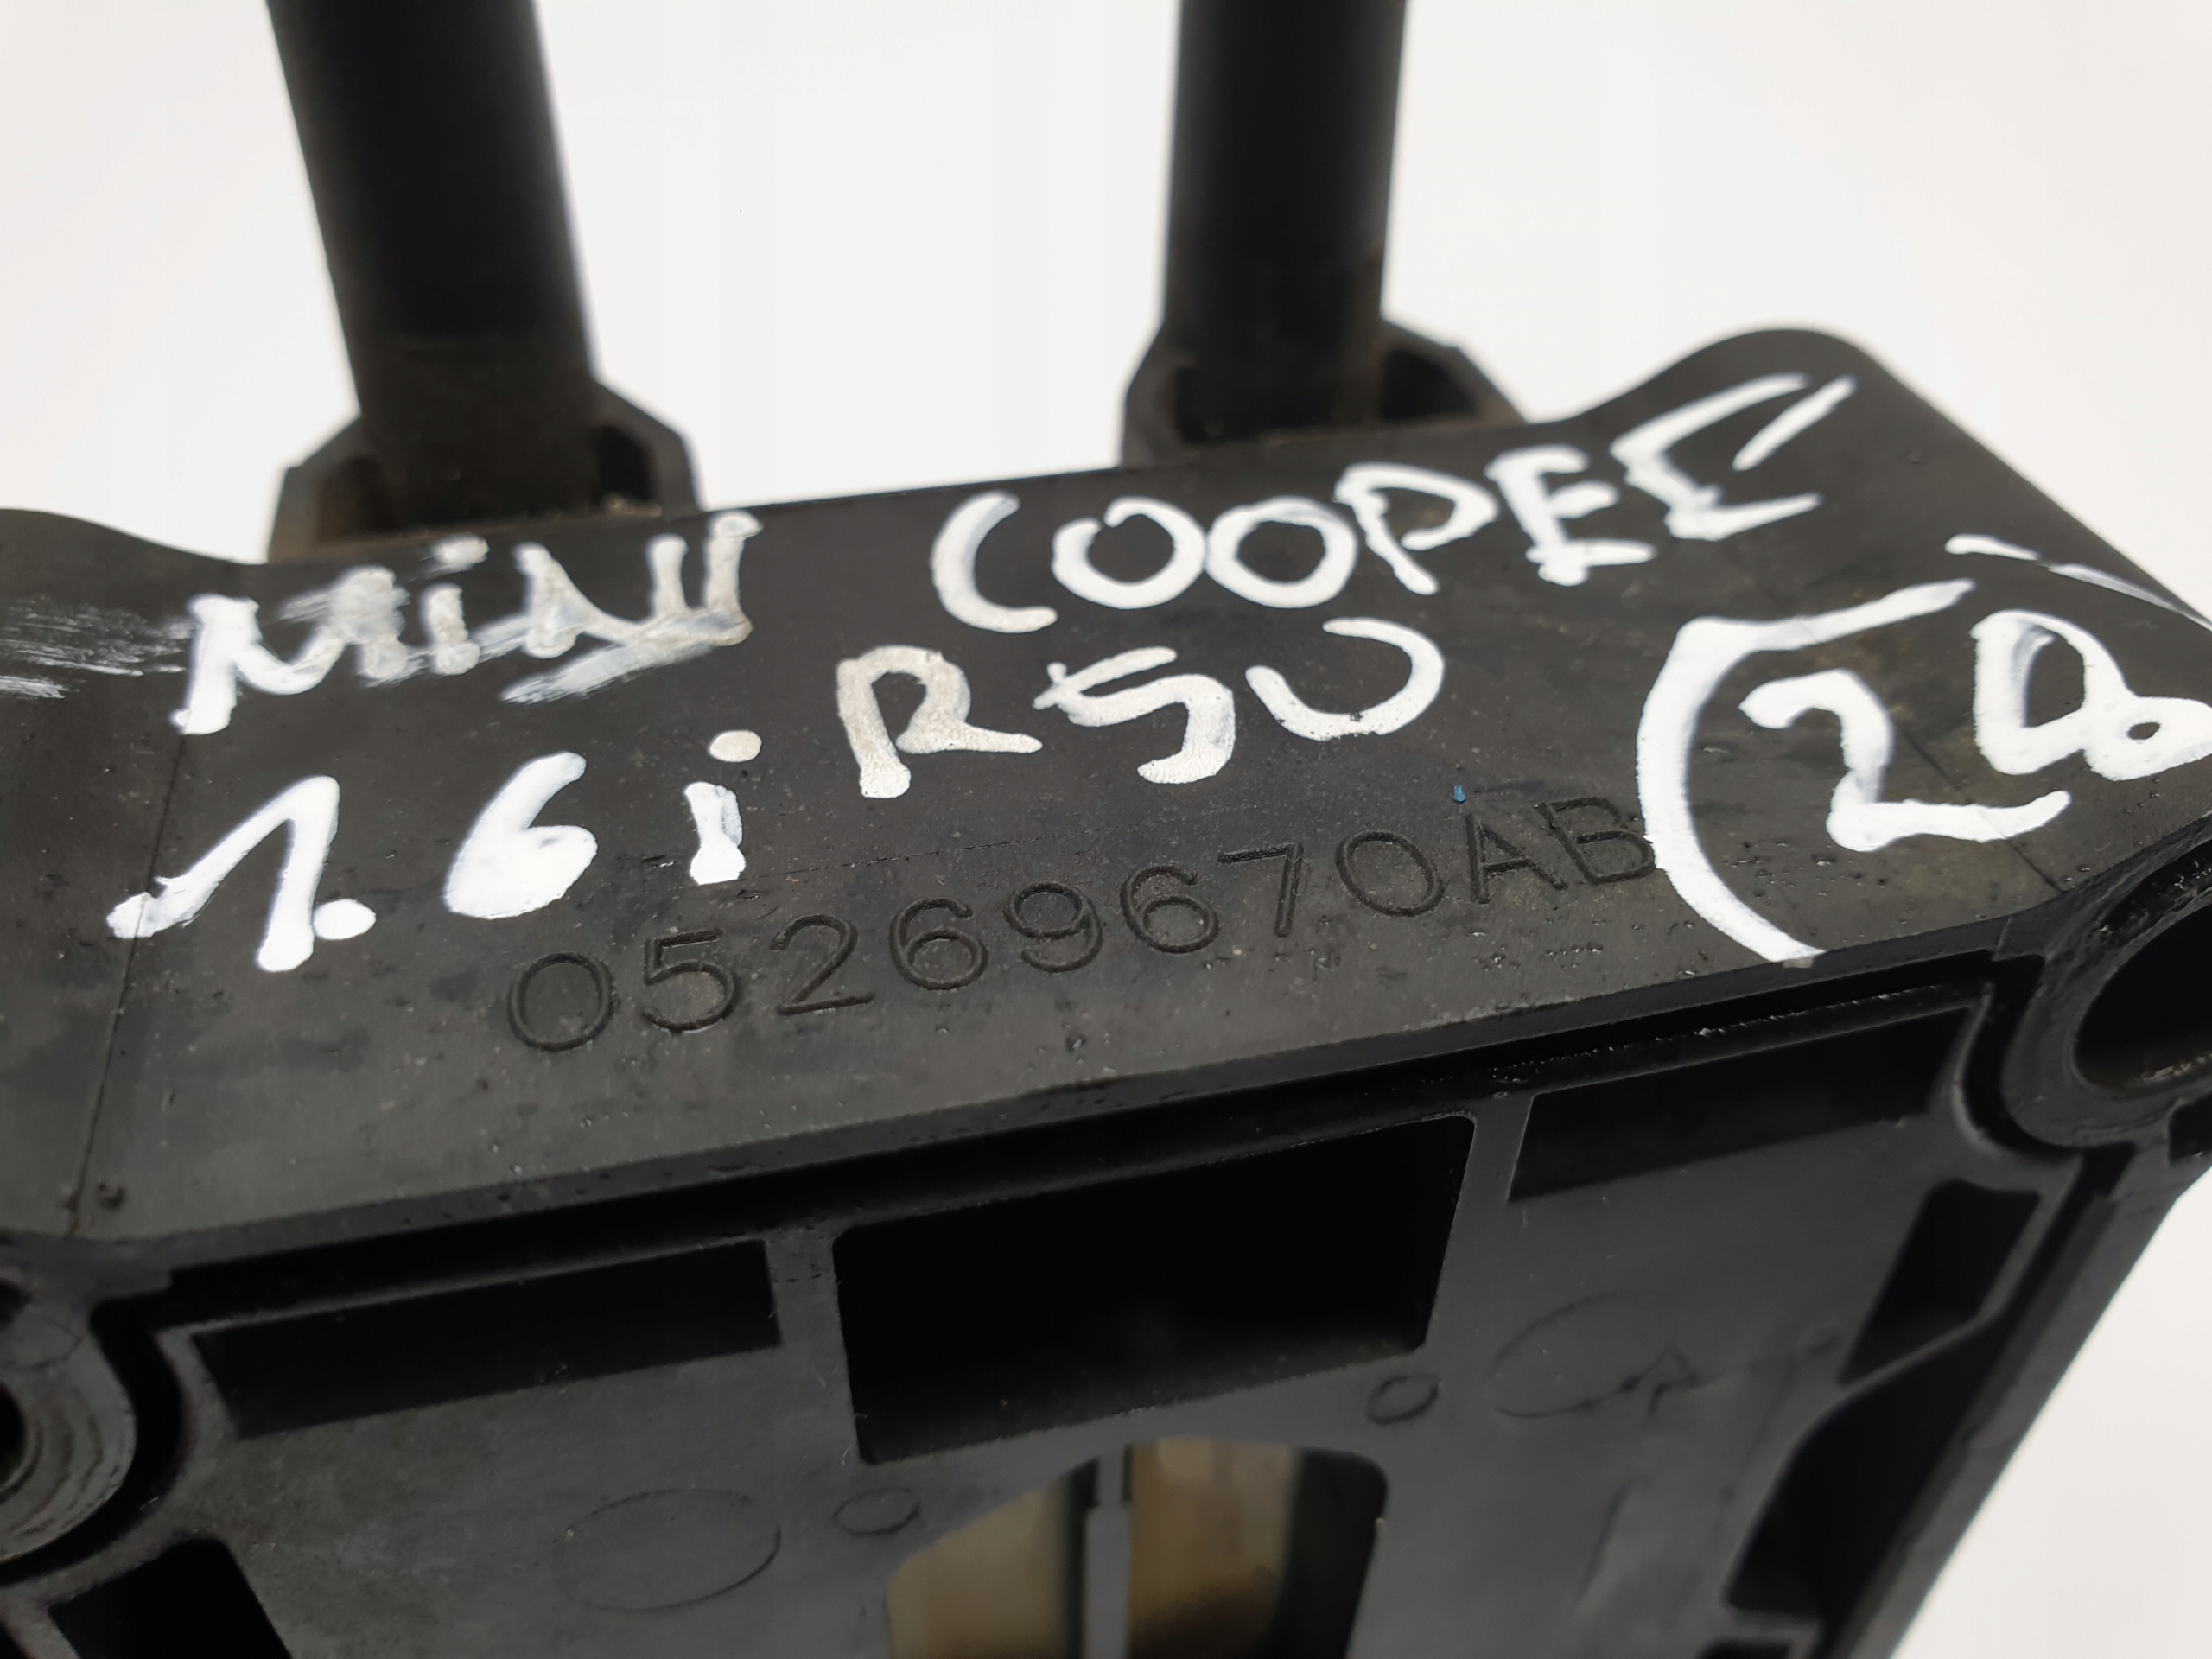 Mini Cooper R50 1.6 i CEWKA ZAPŁONOWA 05269670AB